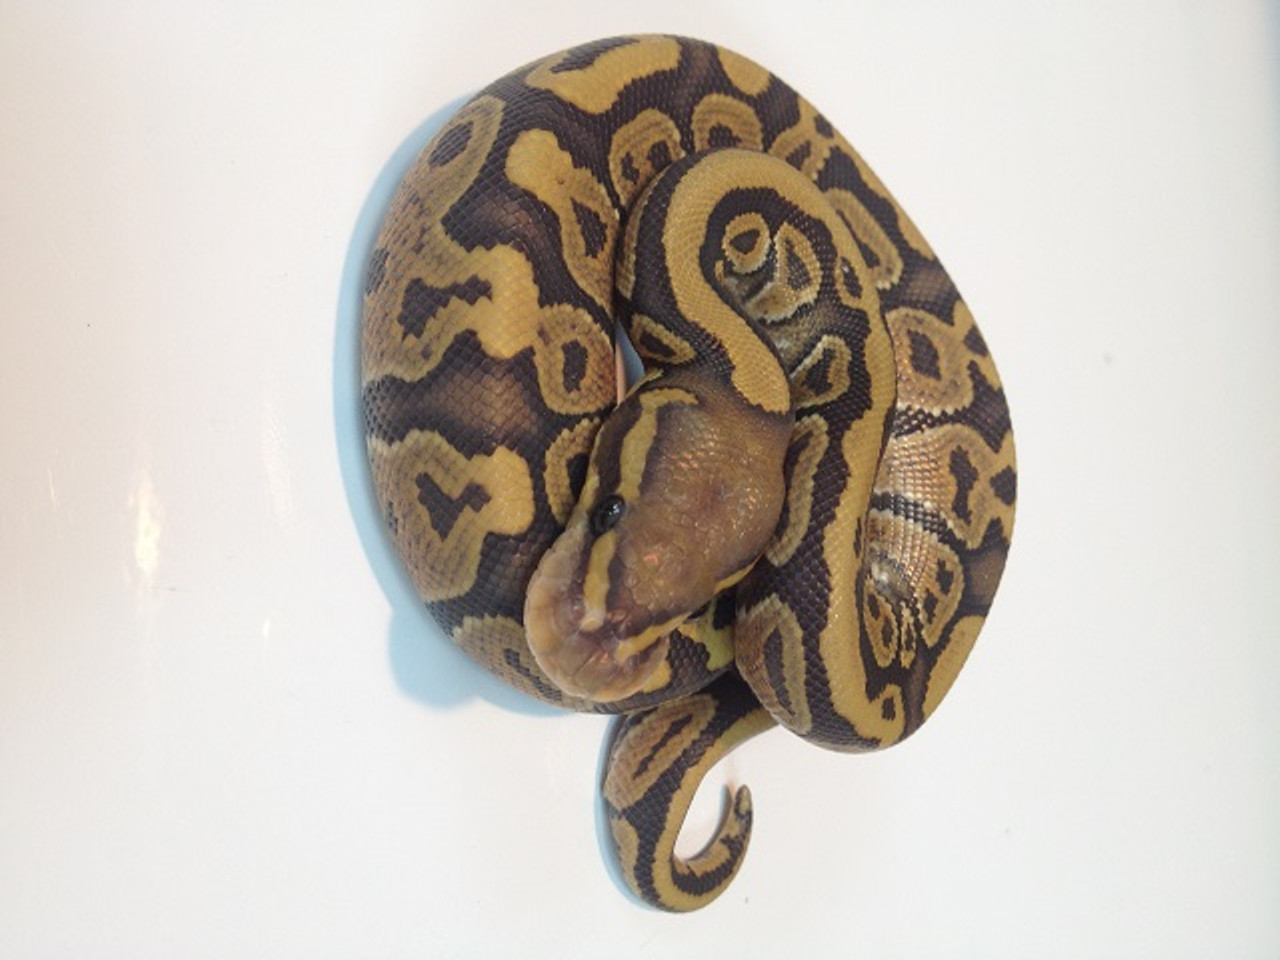 Orange ghost ball python for sale